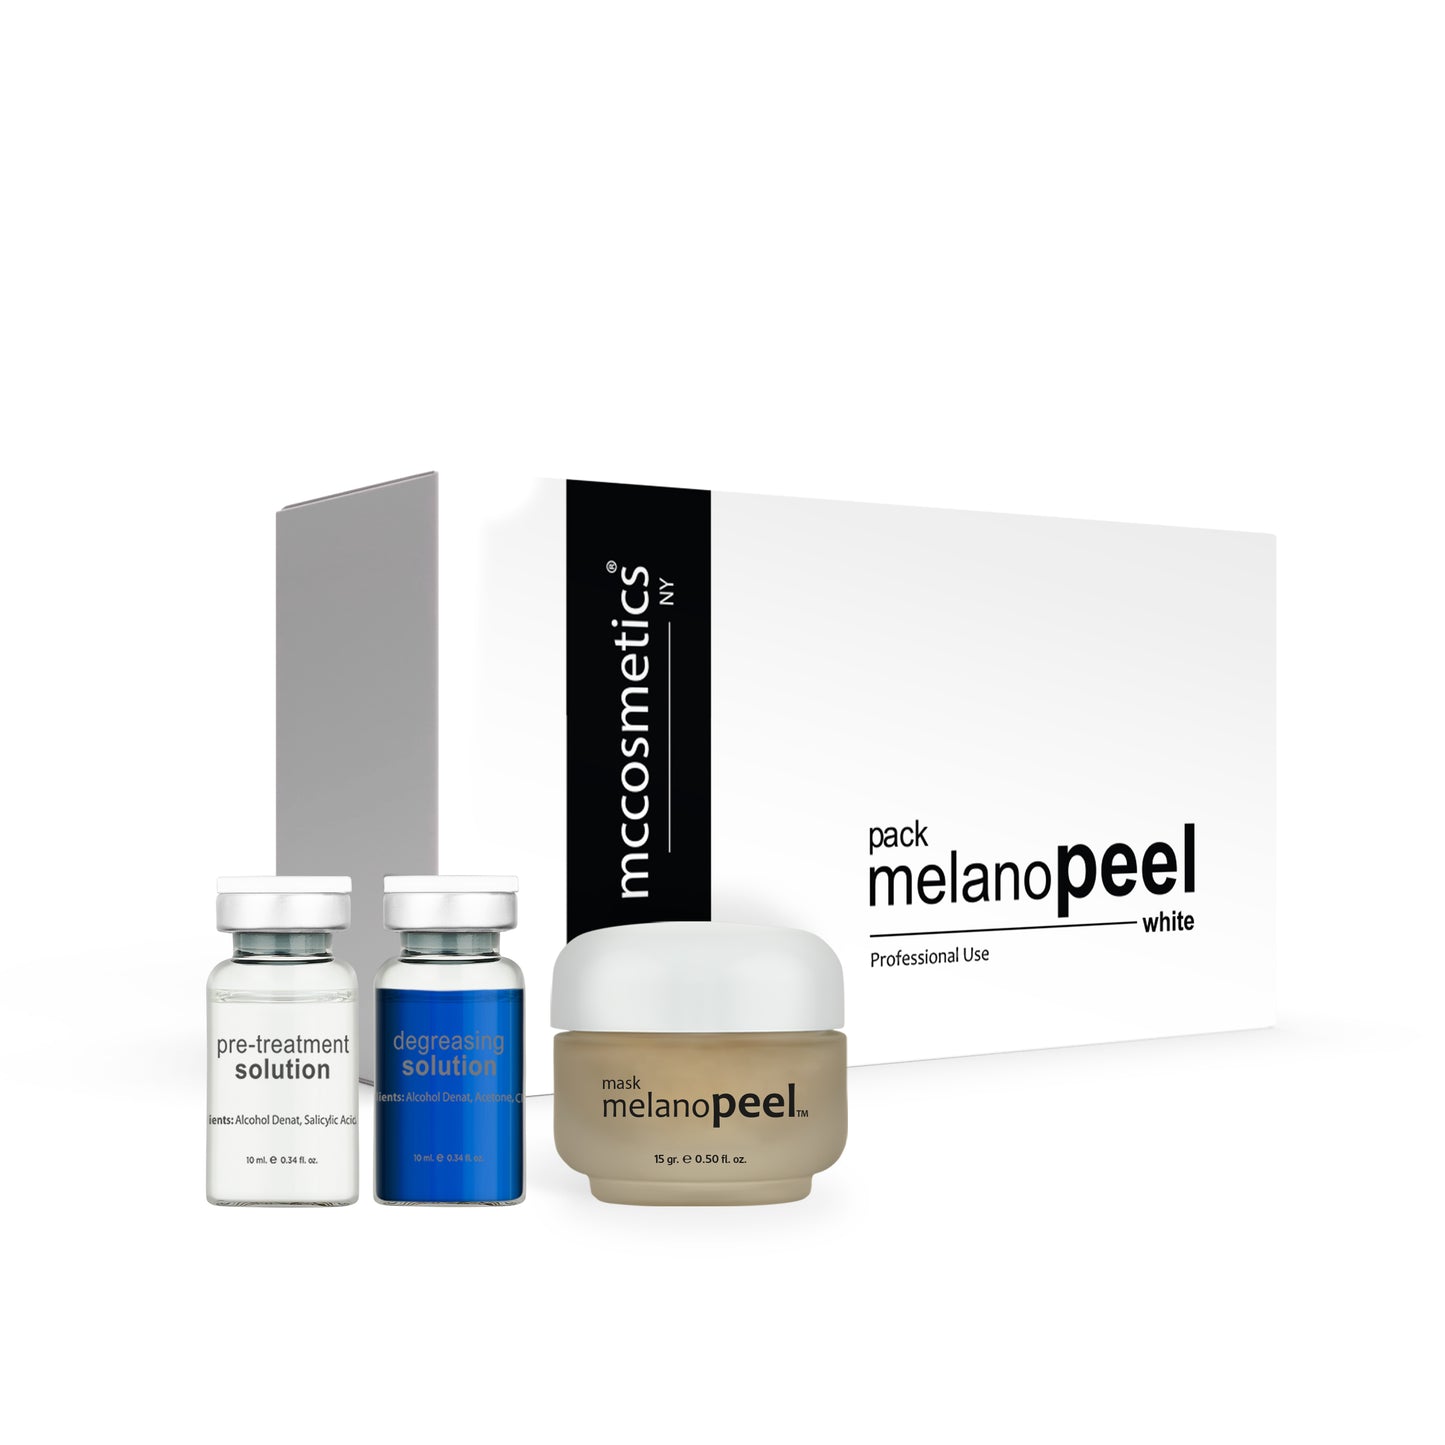 melanopeel professional - mccosmetics.ny